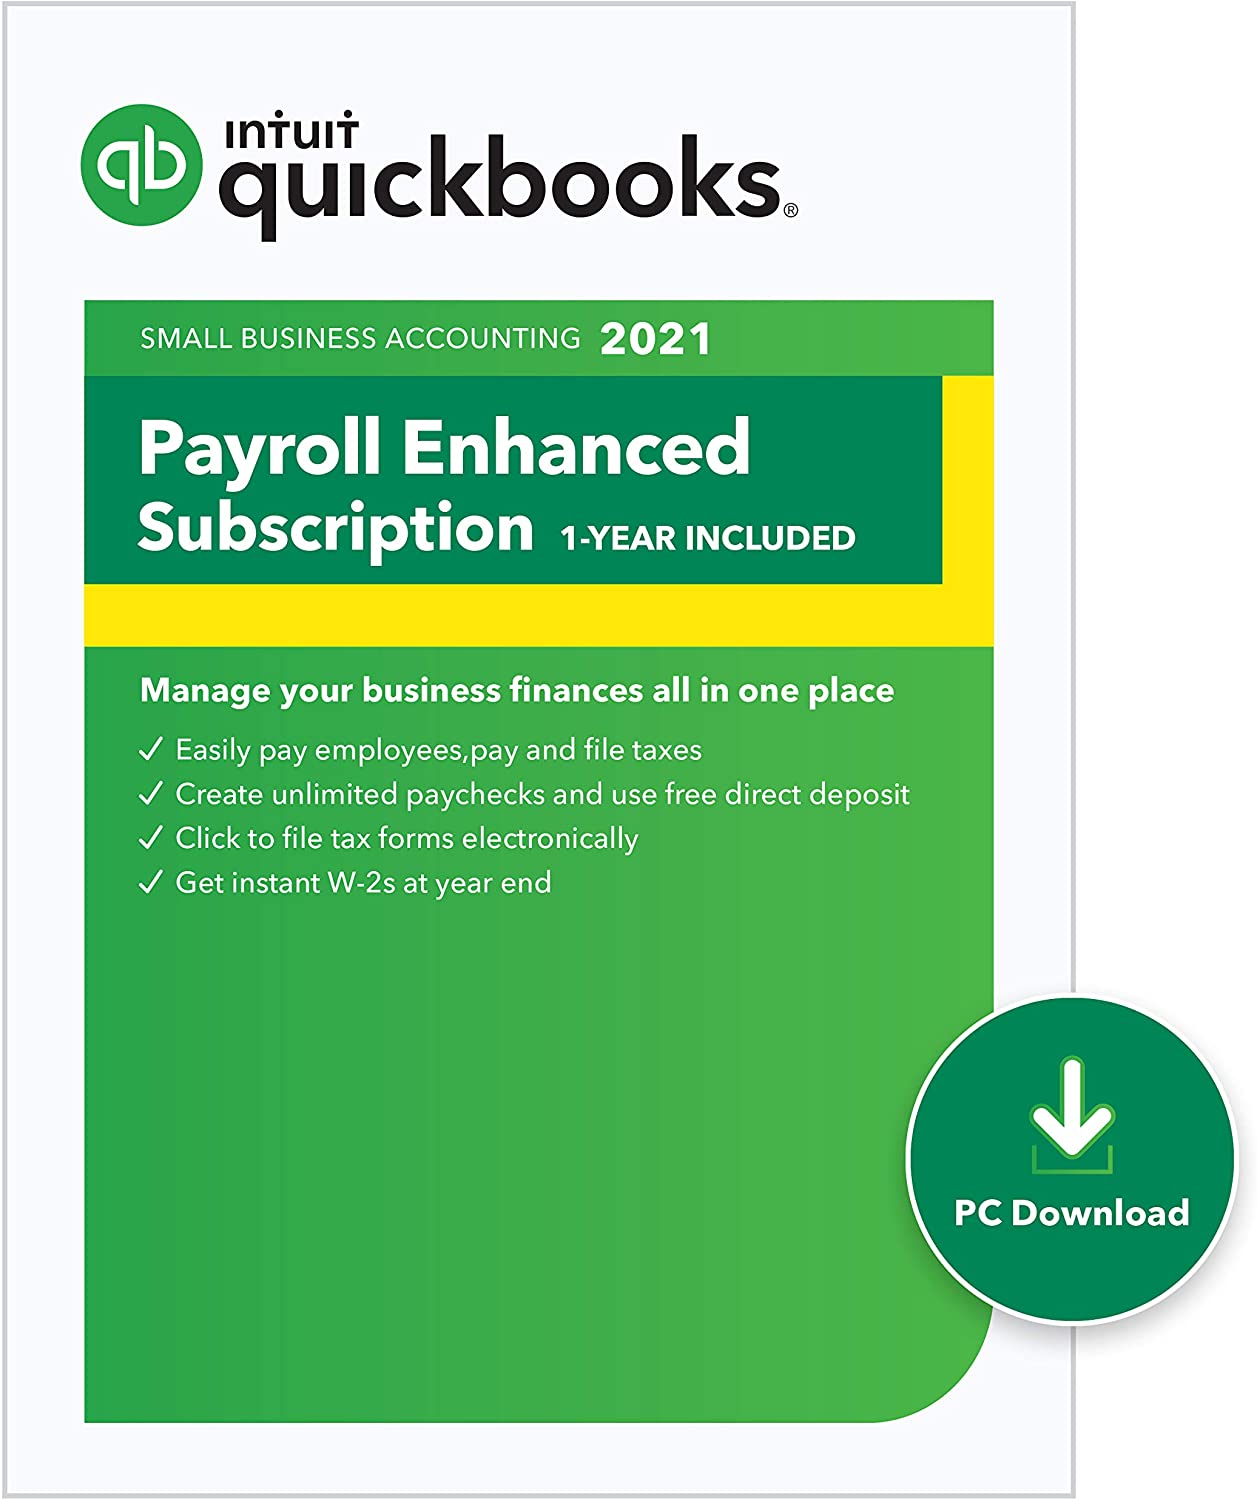 quickbooks for mac payroll login